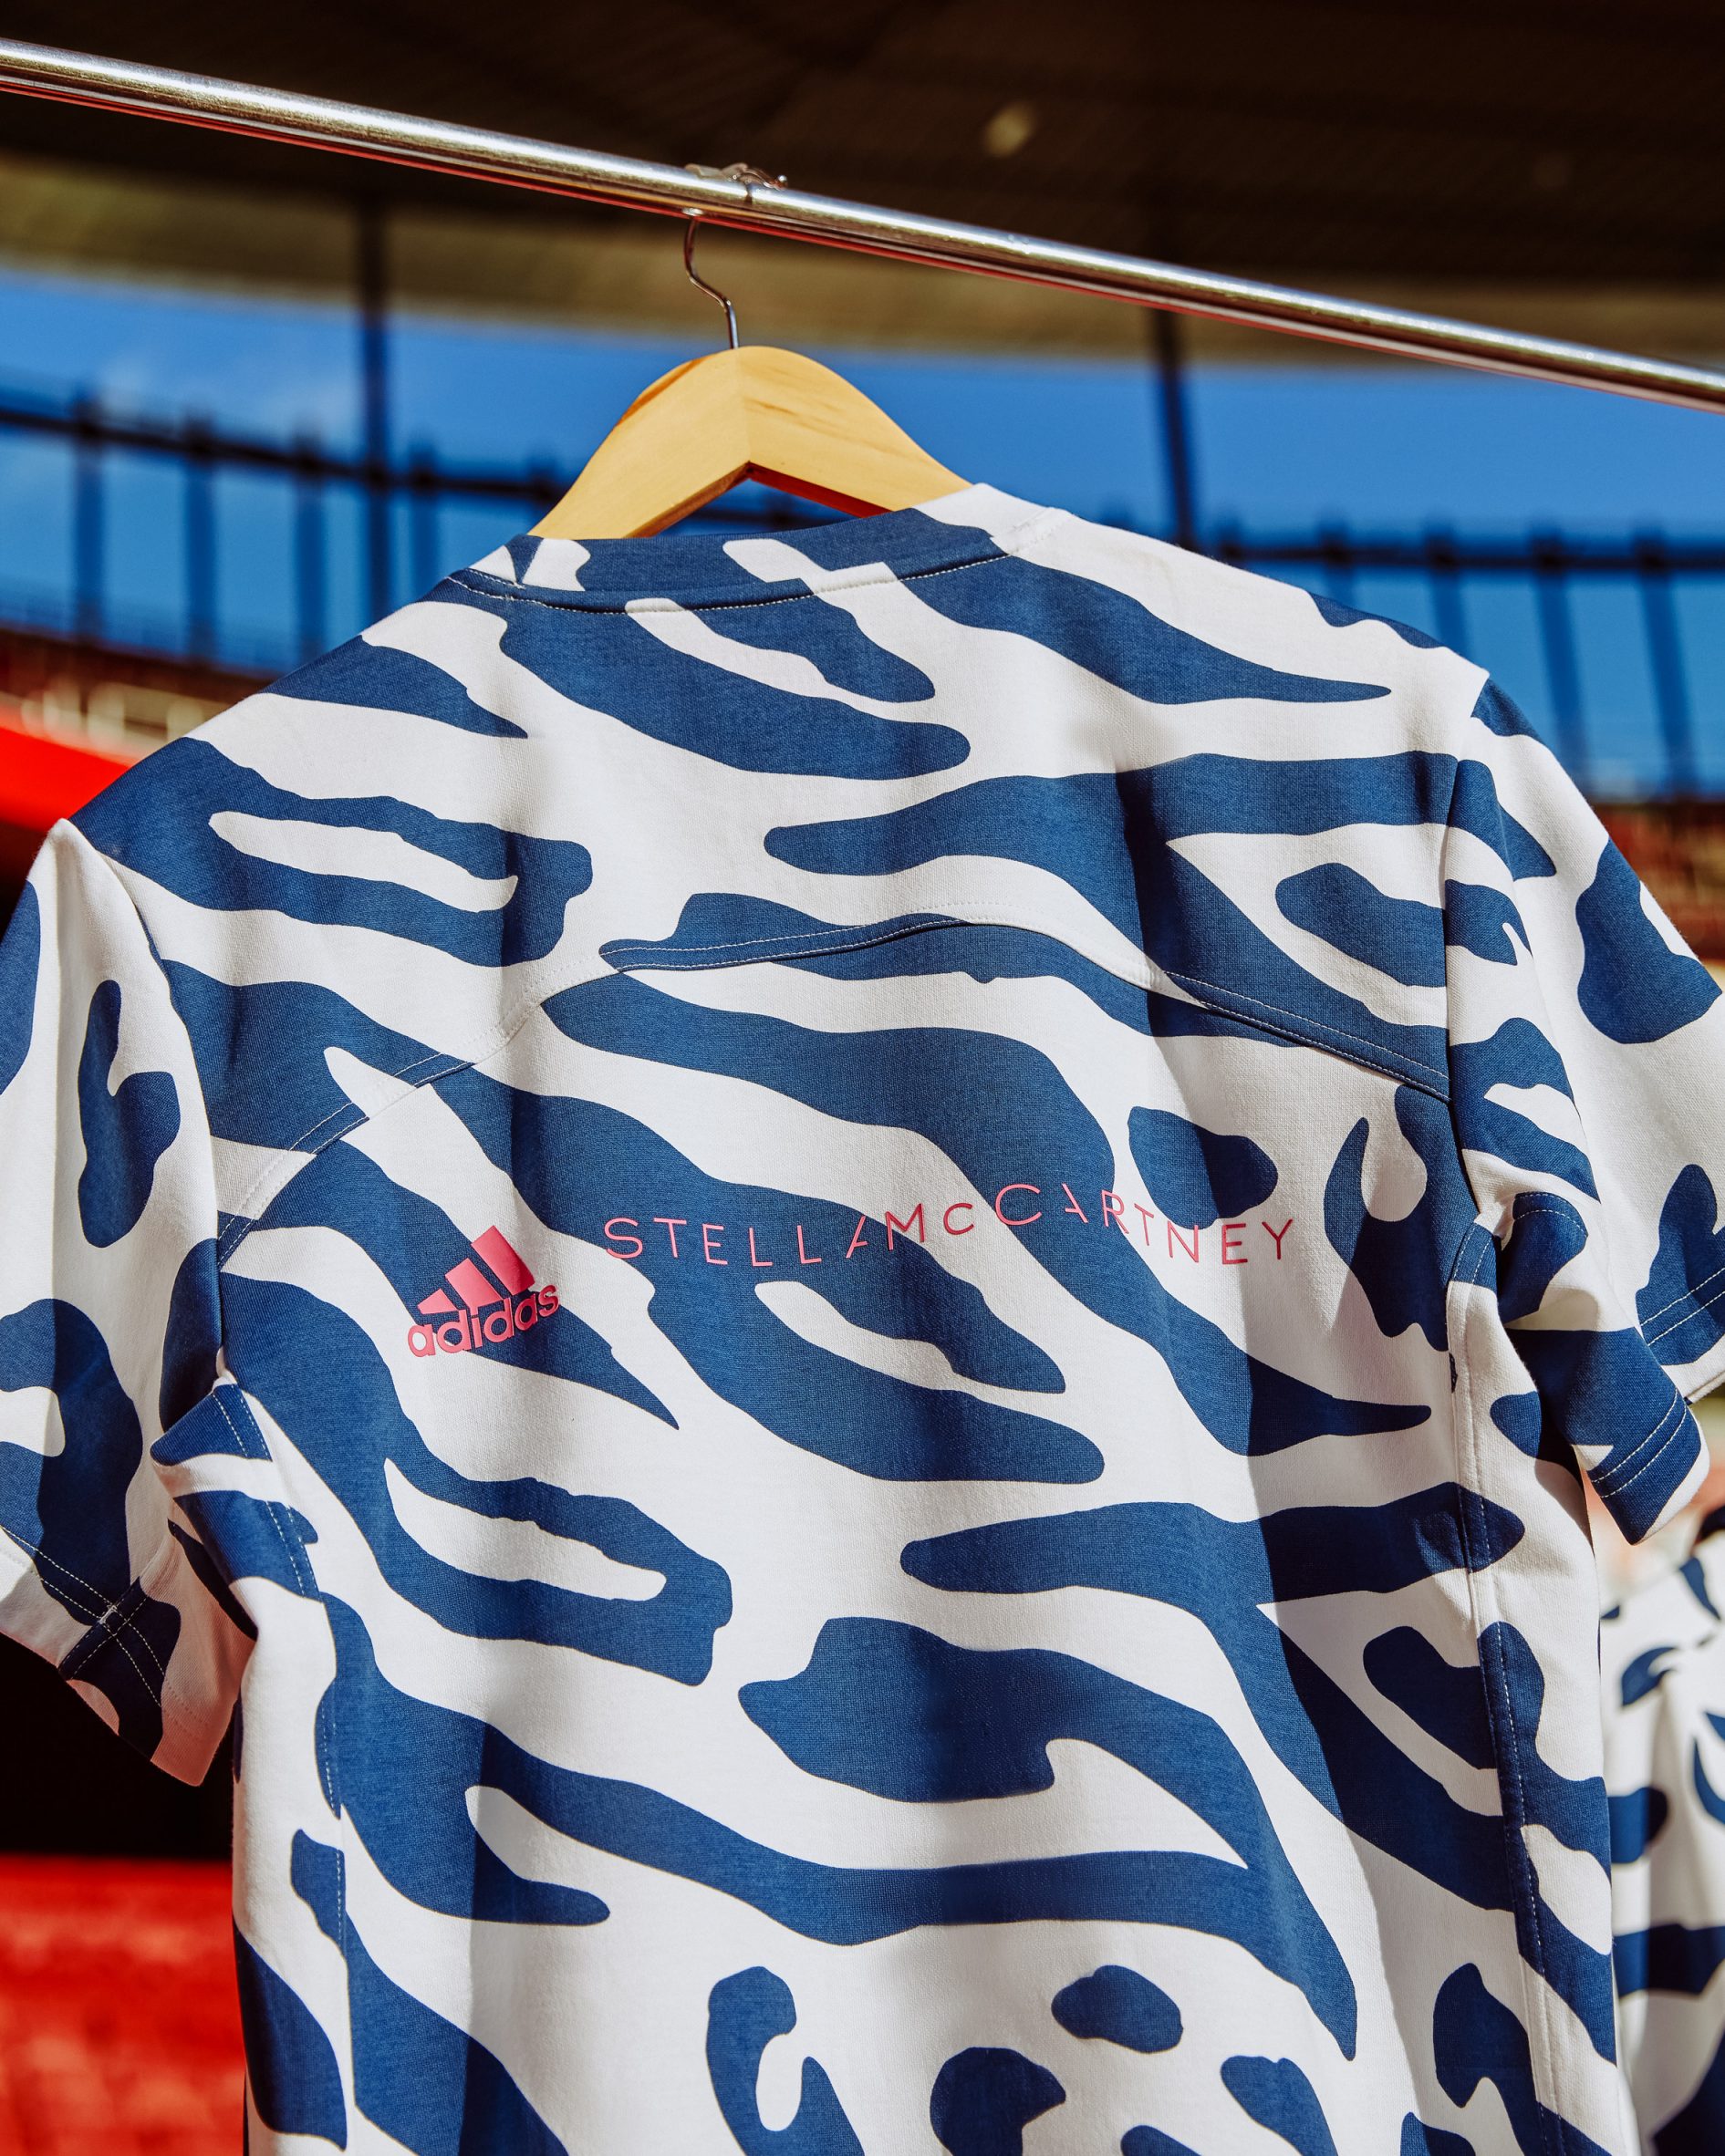 Stella McCartney designs leopard-print football kit for Arsenal